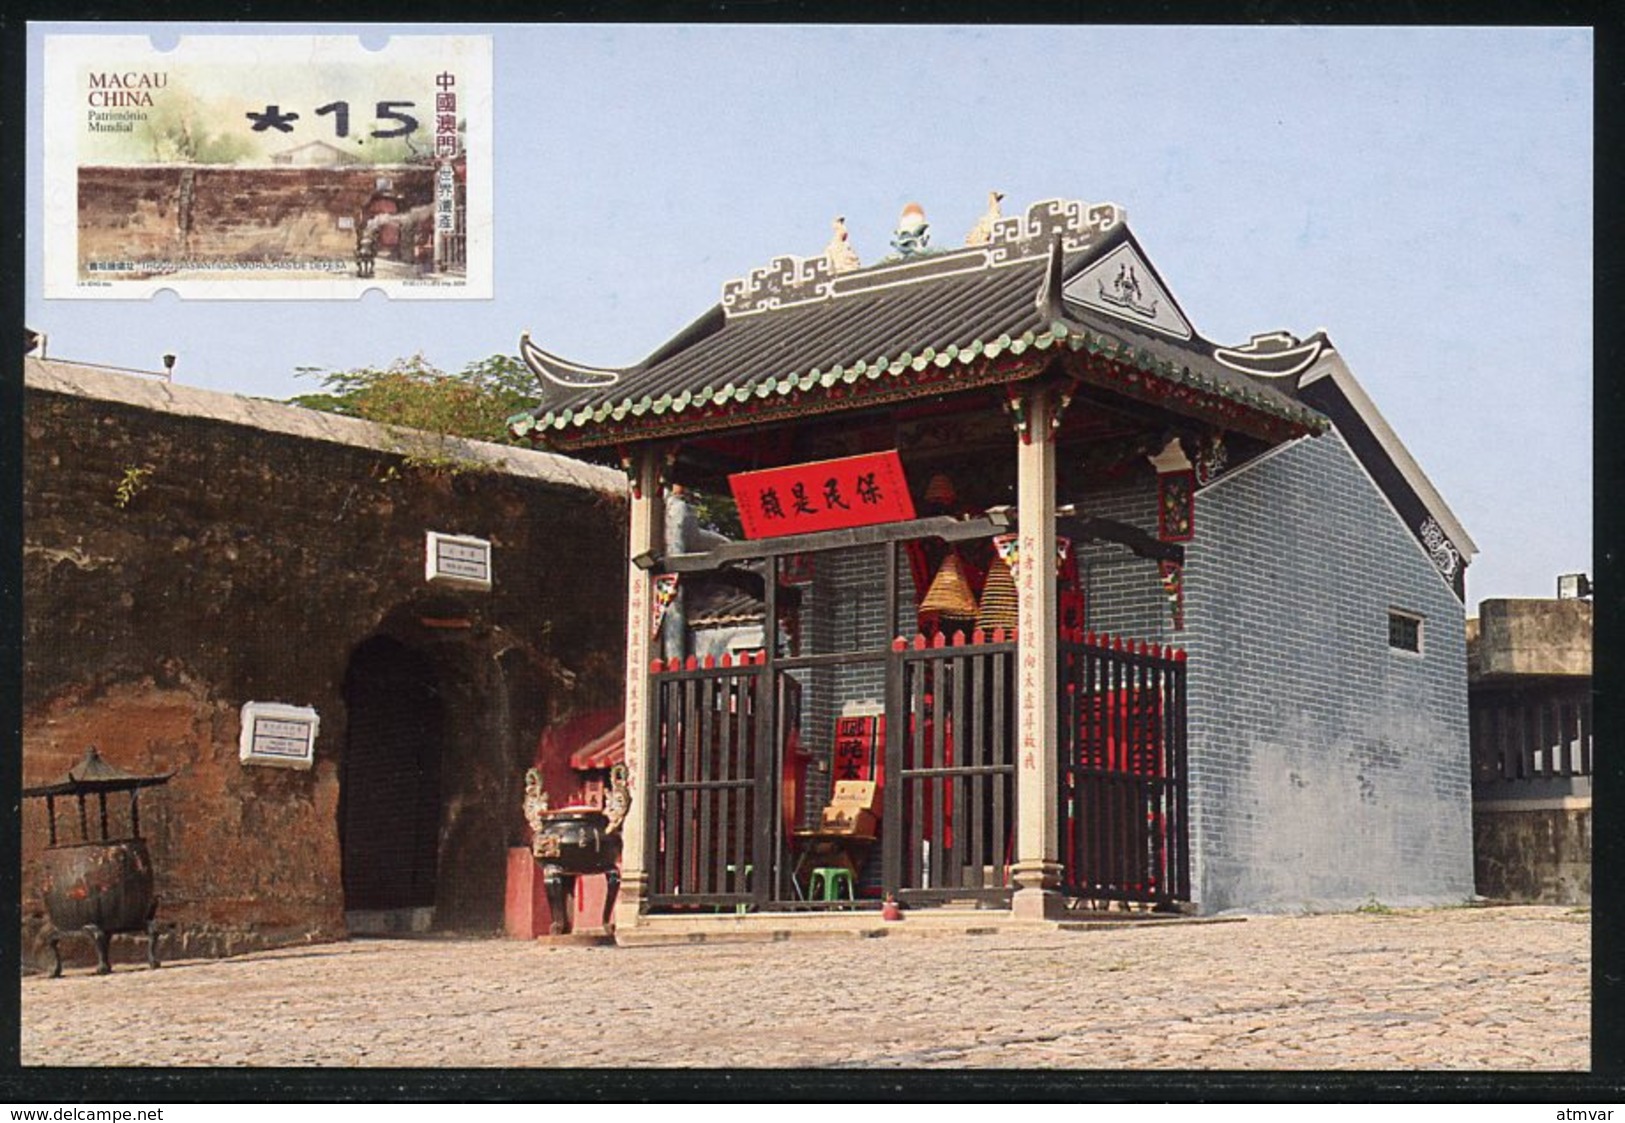 MACAU / MACAO (2008). ATM Nagler - Patrimonio Mundial, World Heritage - Old City Walls - Na Tcha Temple - Automaten